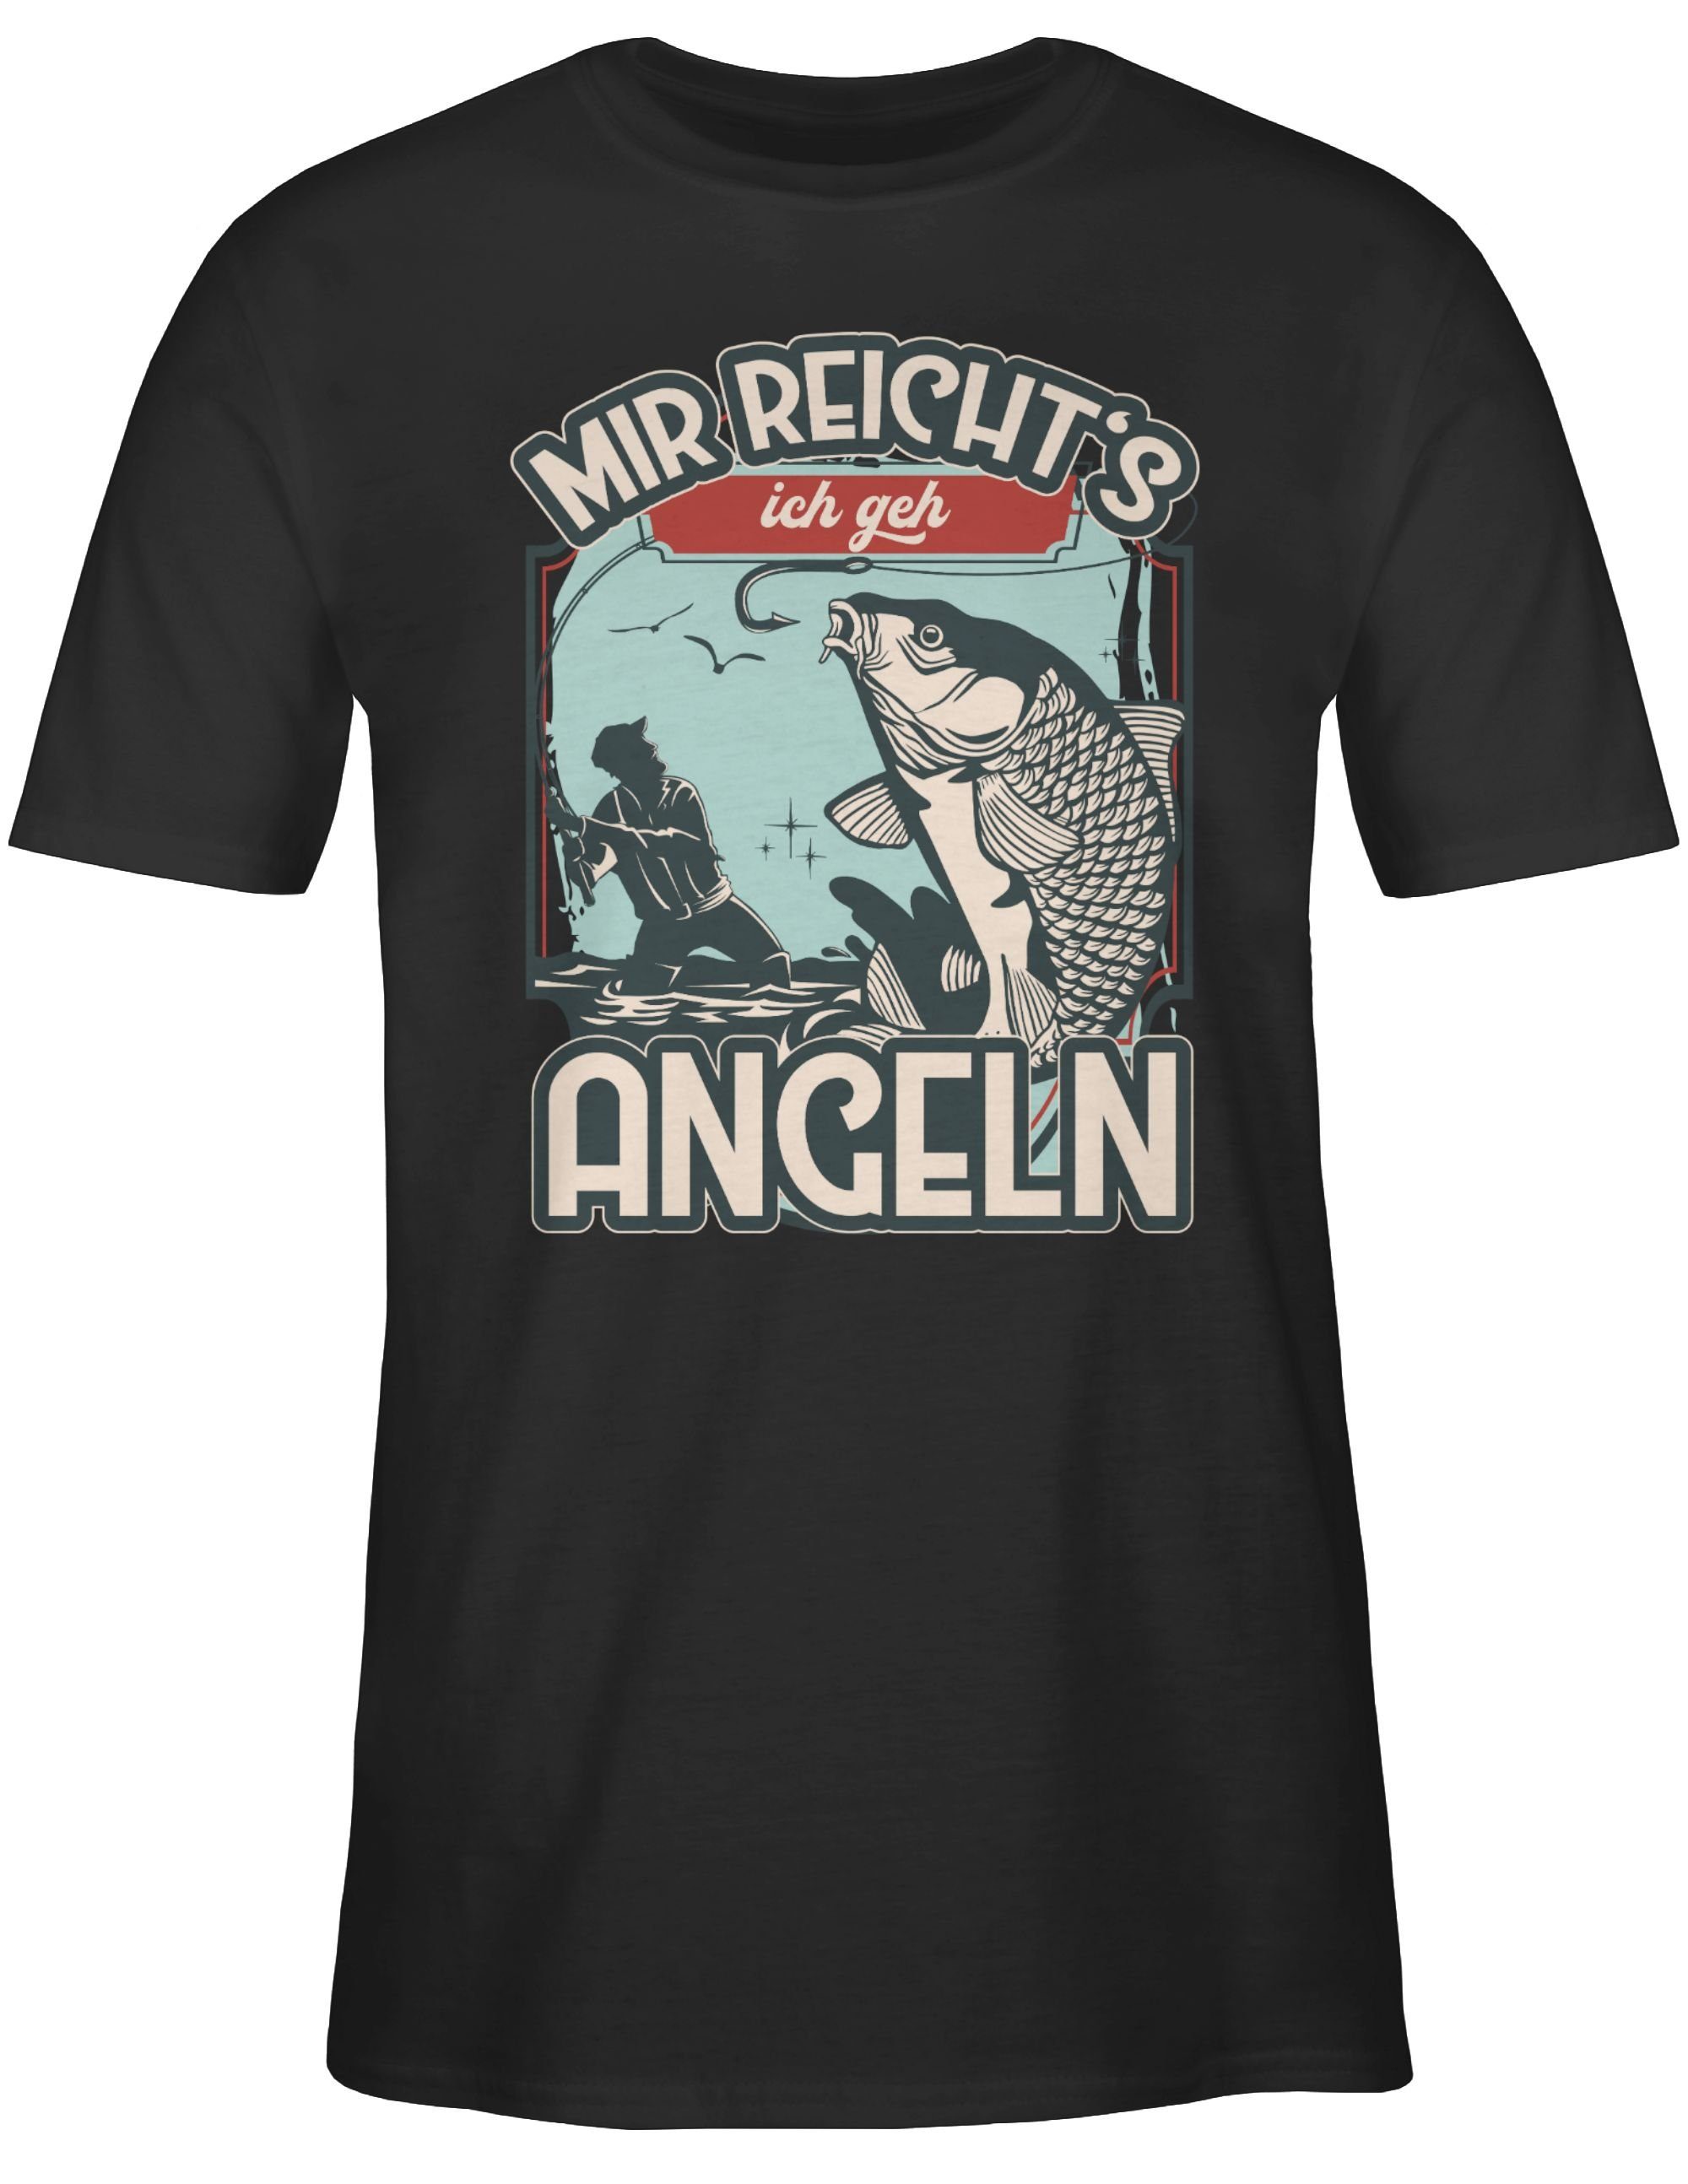 - T-Shirt Schwarz Herren angeln Angler Shirtracer - männer angeln Geschenke t geh ich angler shirt T-Shirt - 02 - Mir reicht's lustig angelshirts geschenke Premium